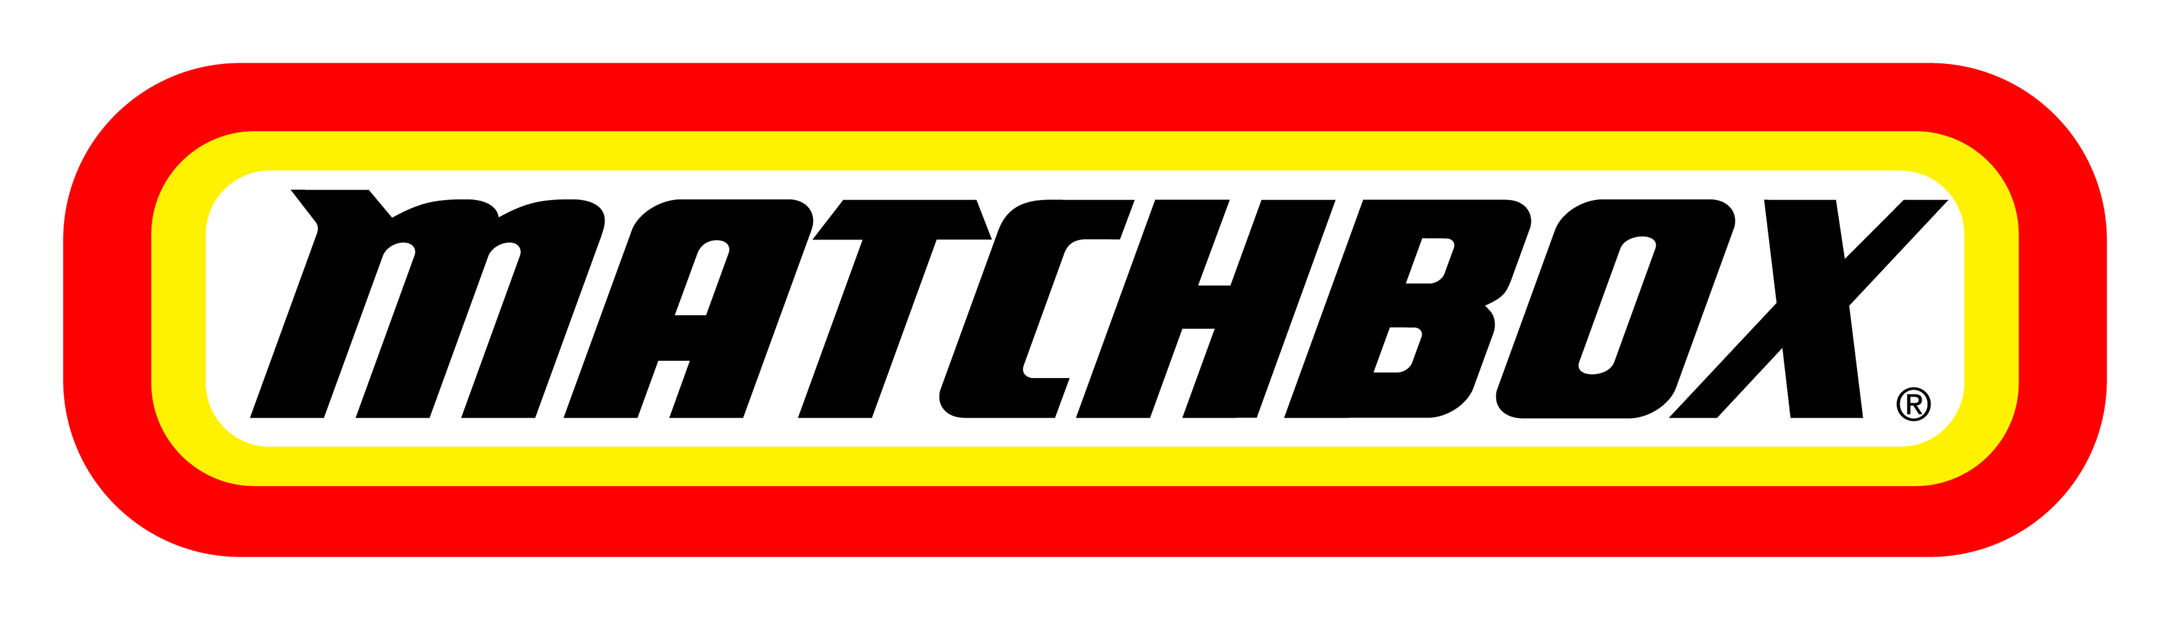 Matchbox Brand Logo